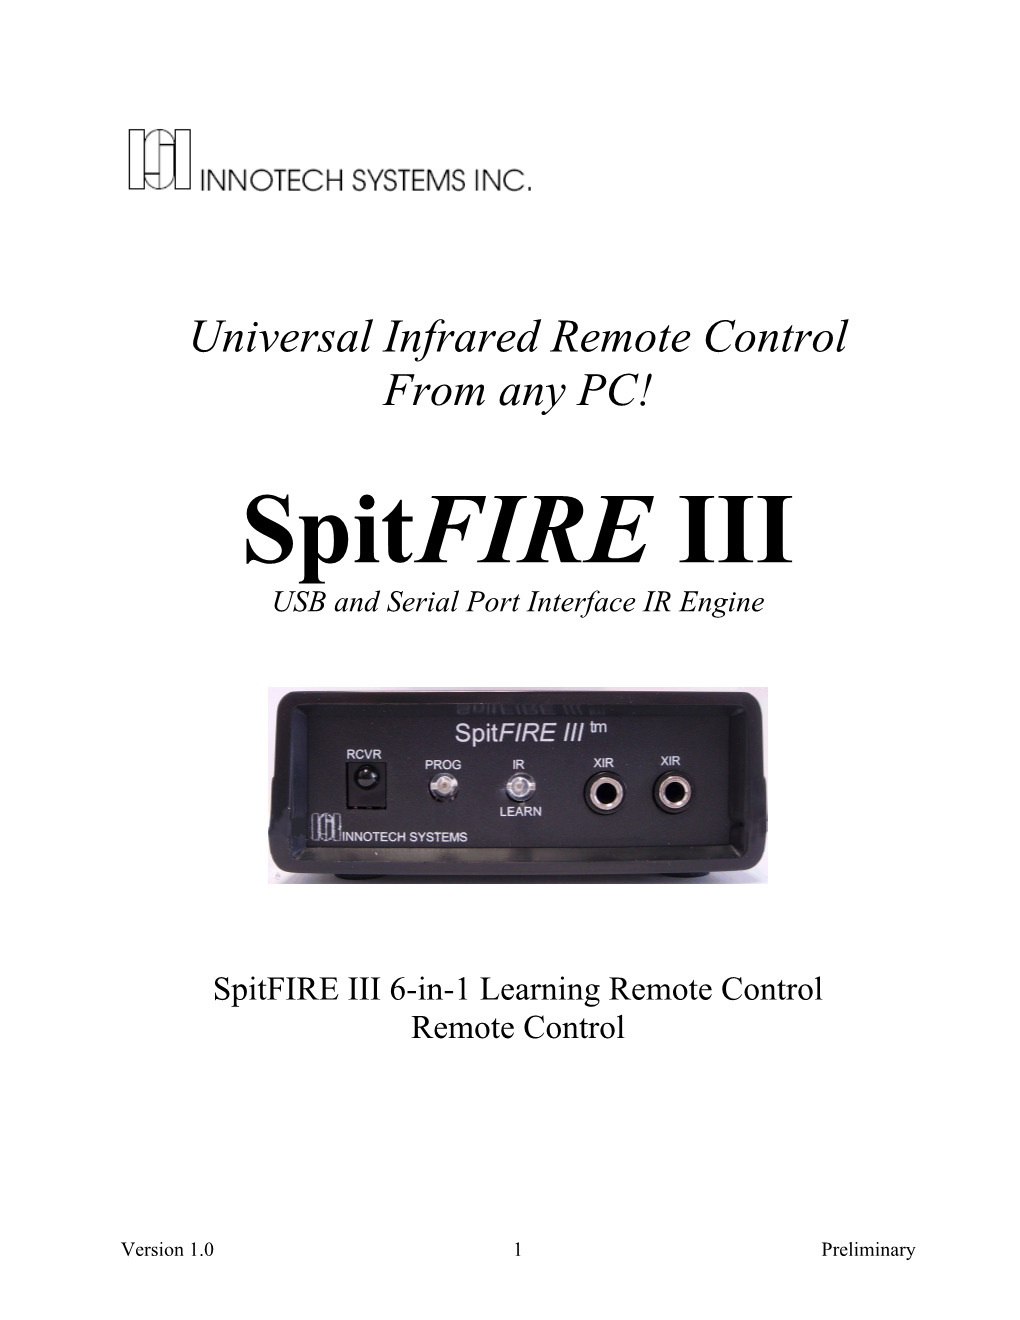 Spitfire III USB and Serial Port Interface IR Engine